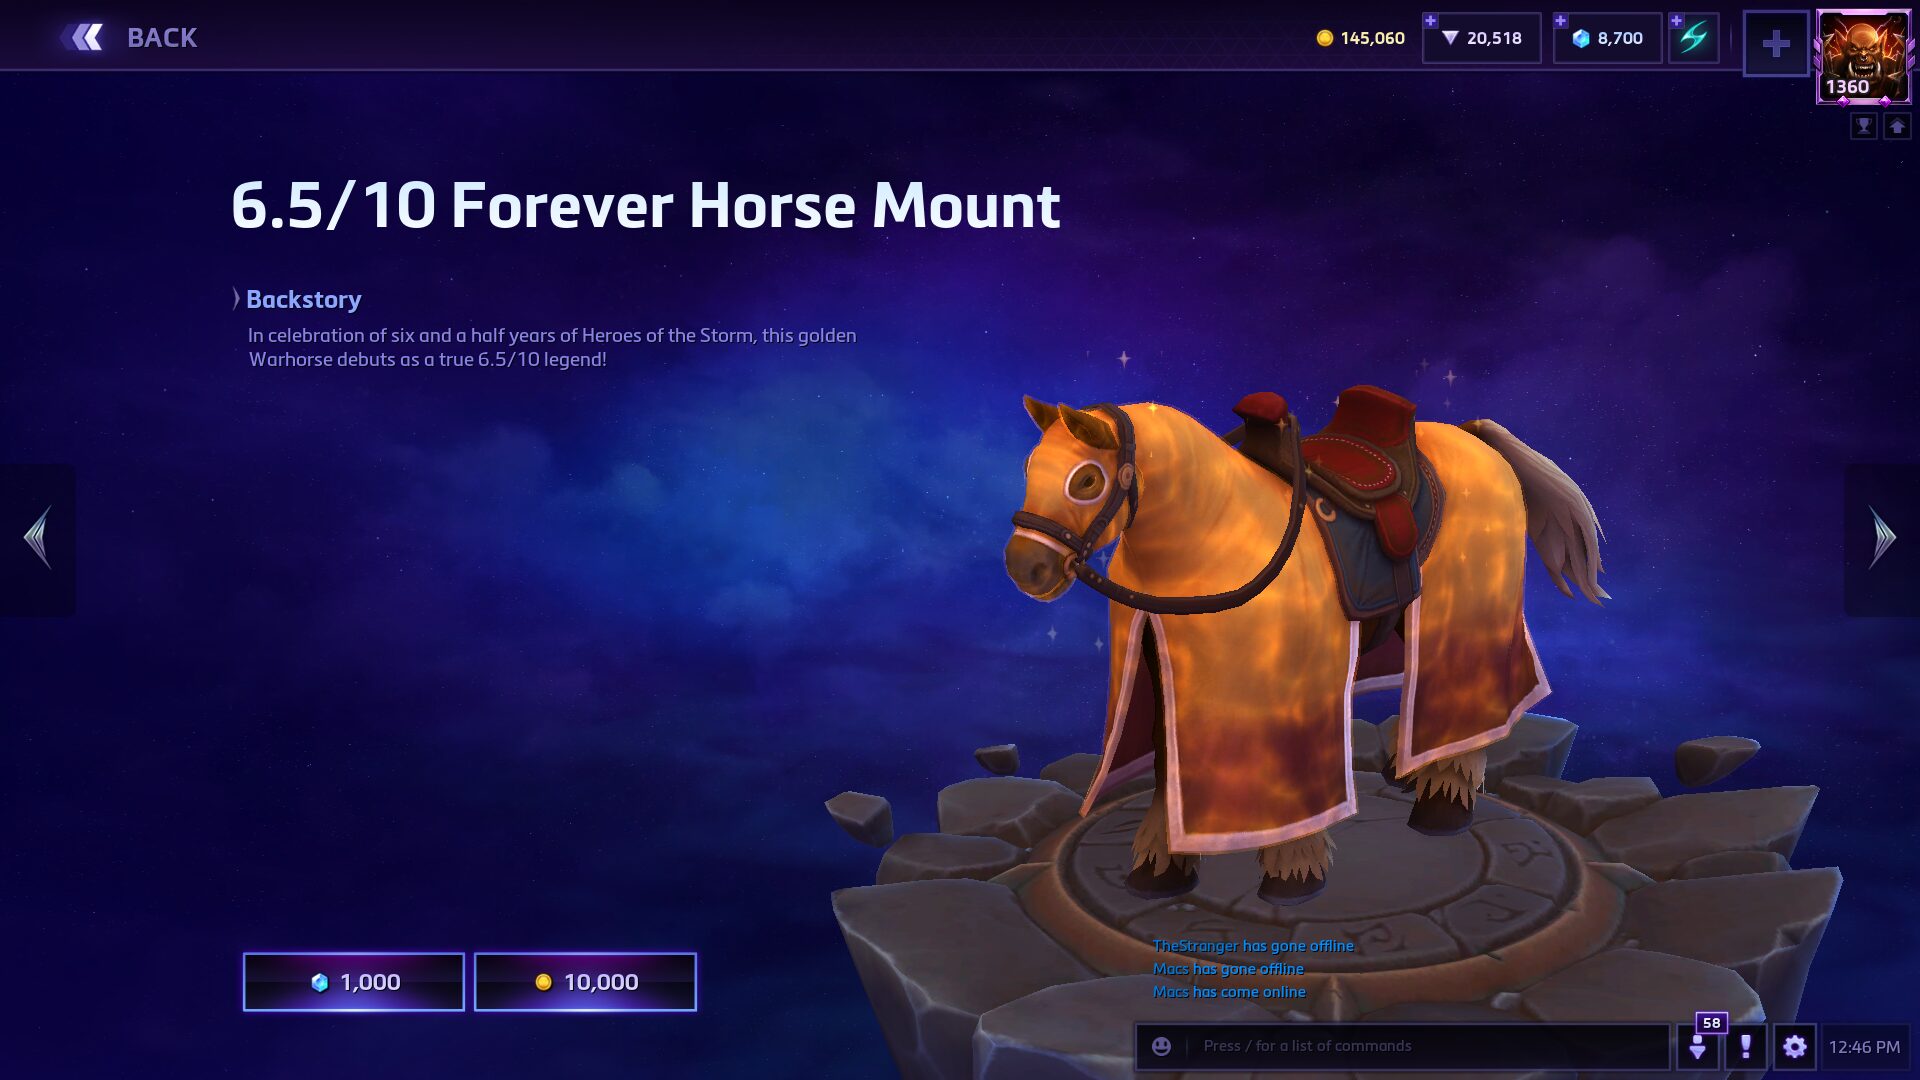 6.5/10 Forever Horse Mount